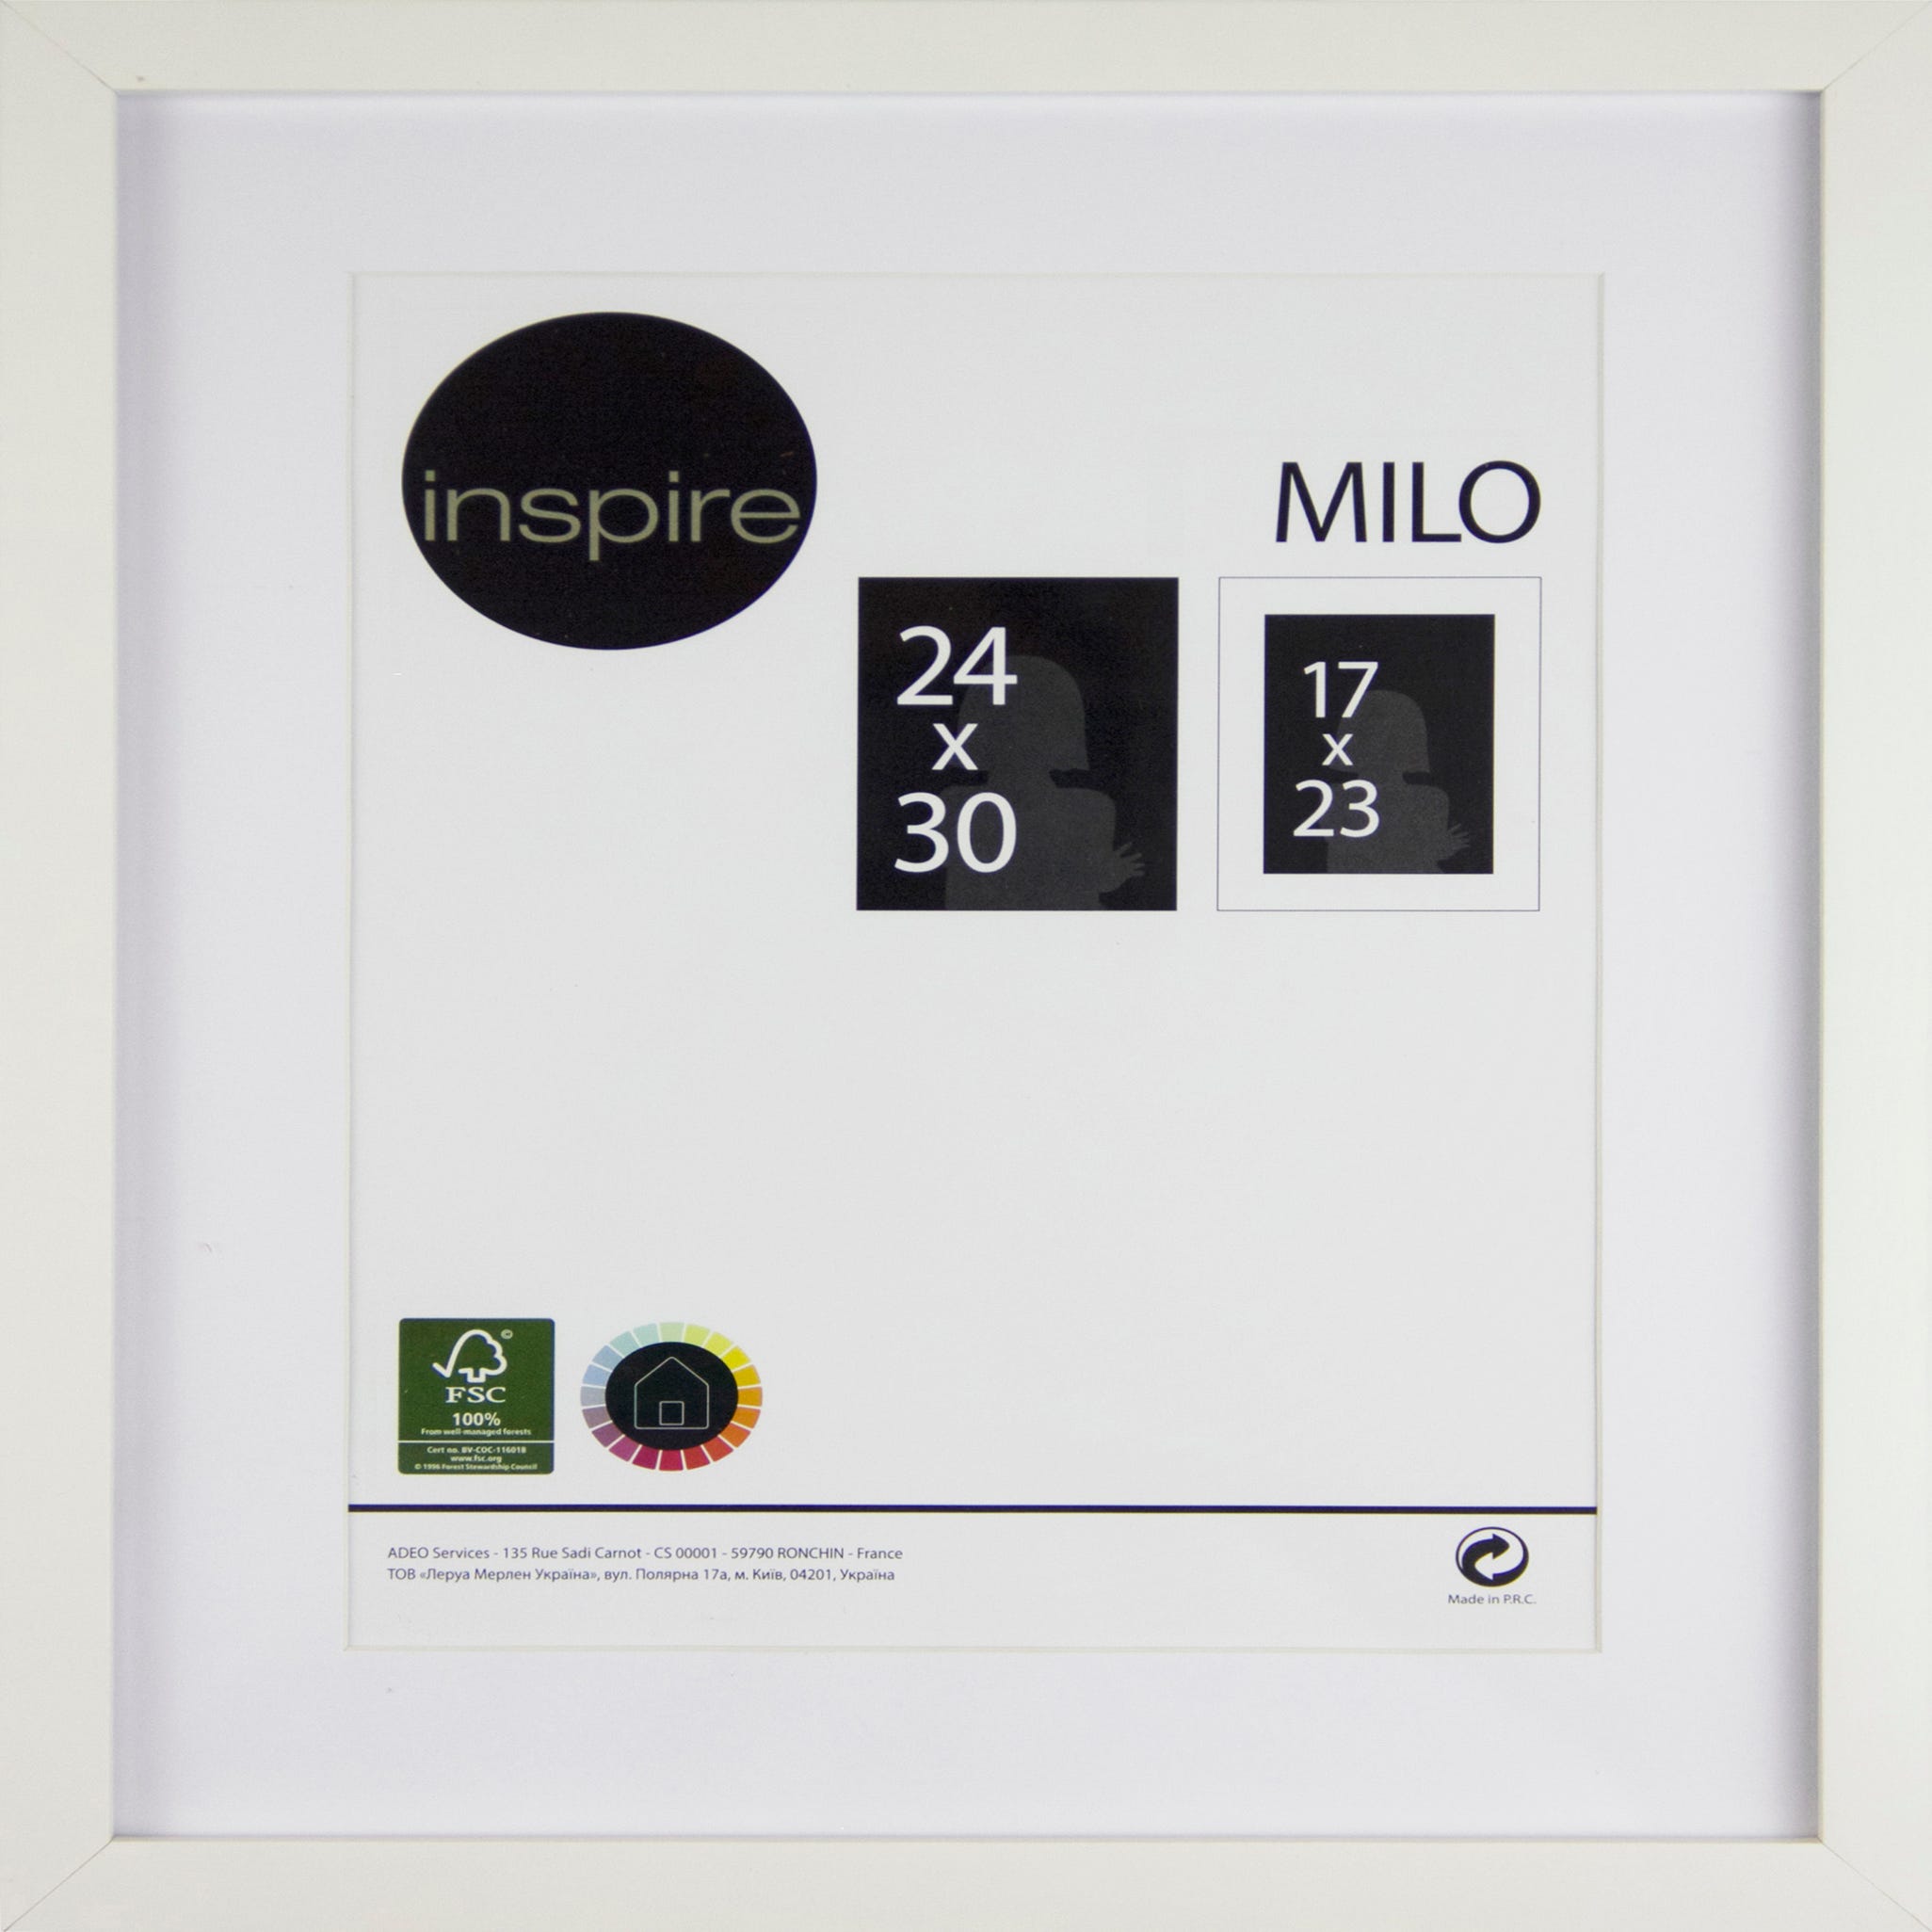 Marco Milo blanco INSPIRE 30x30cm